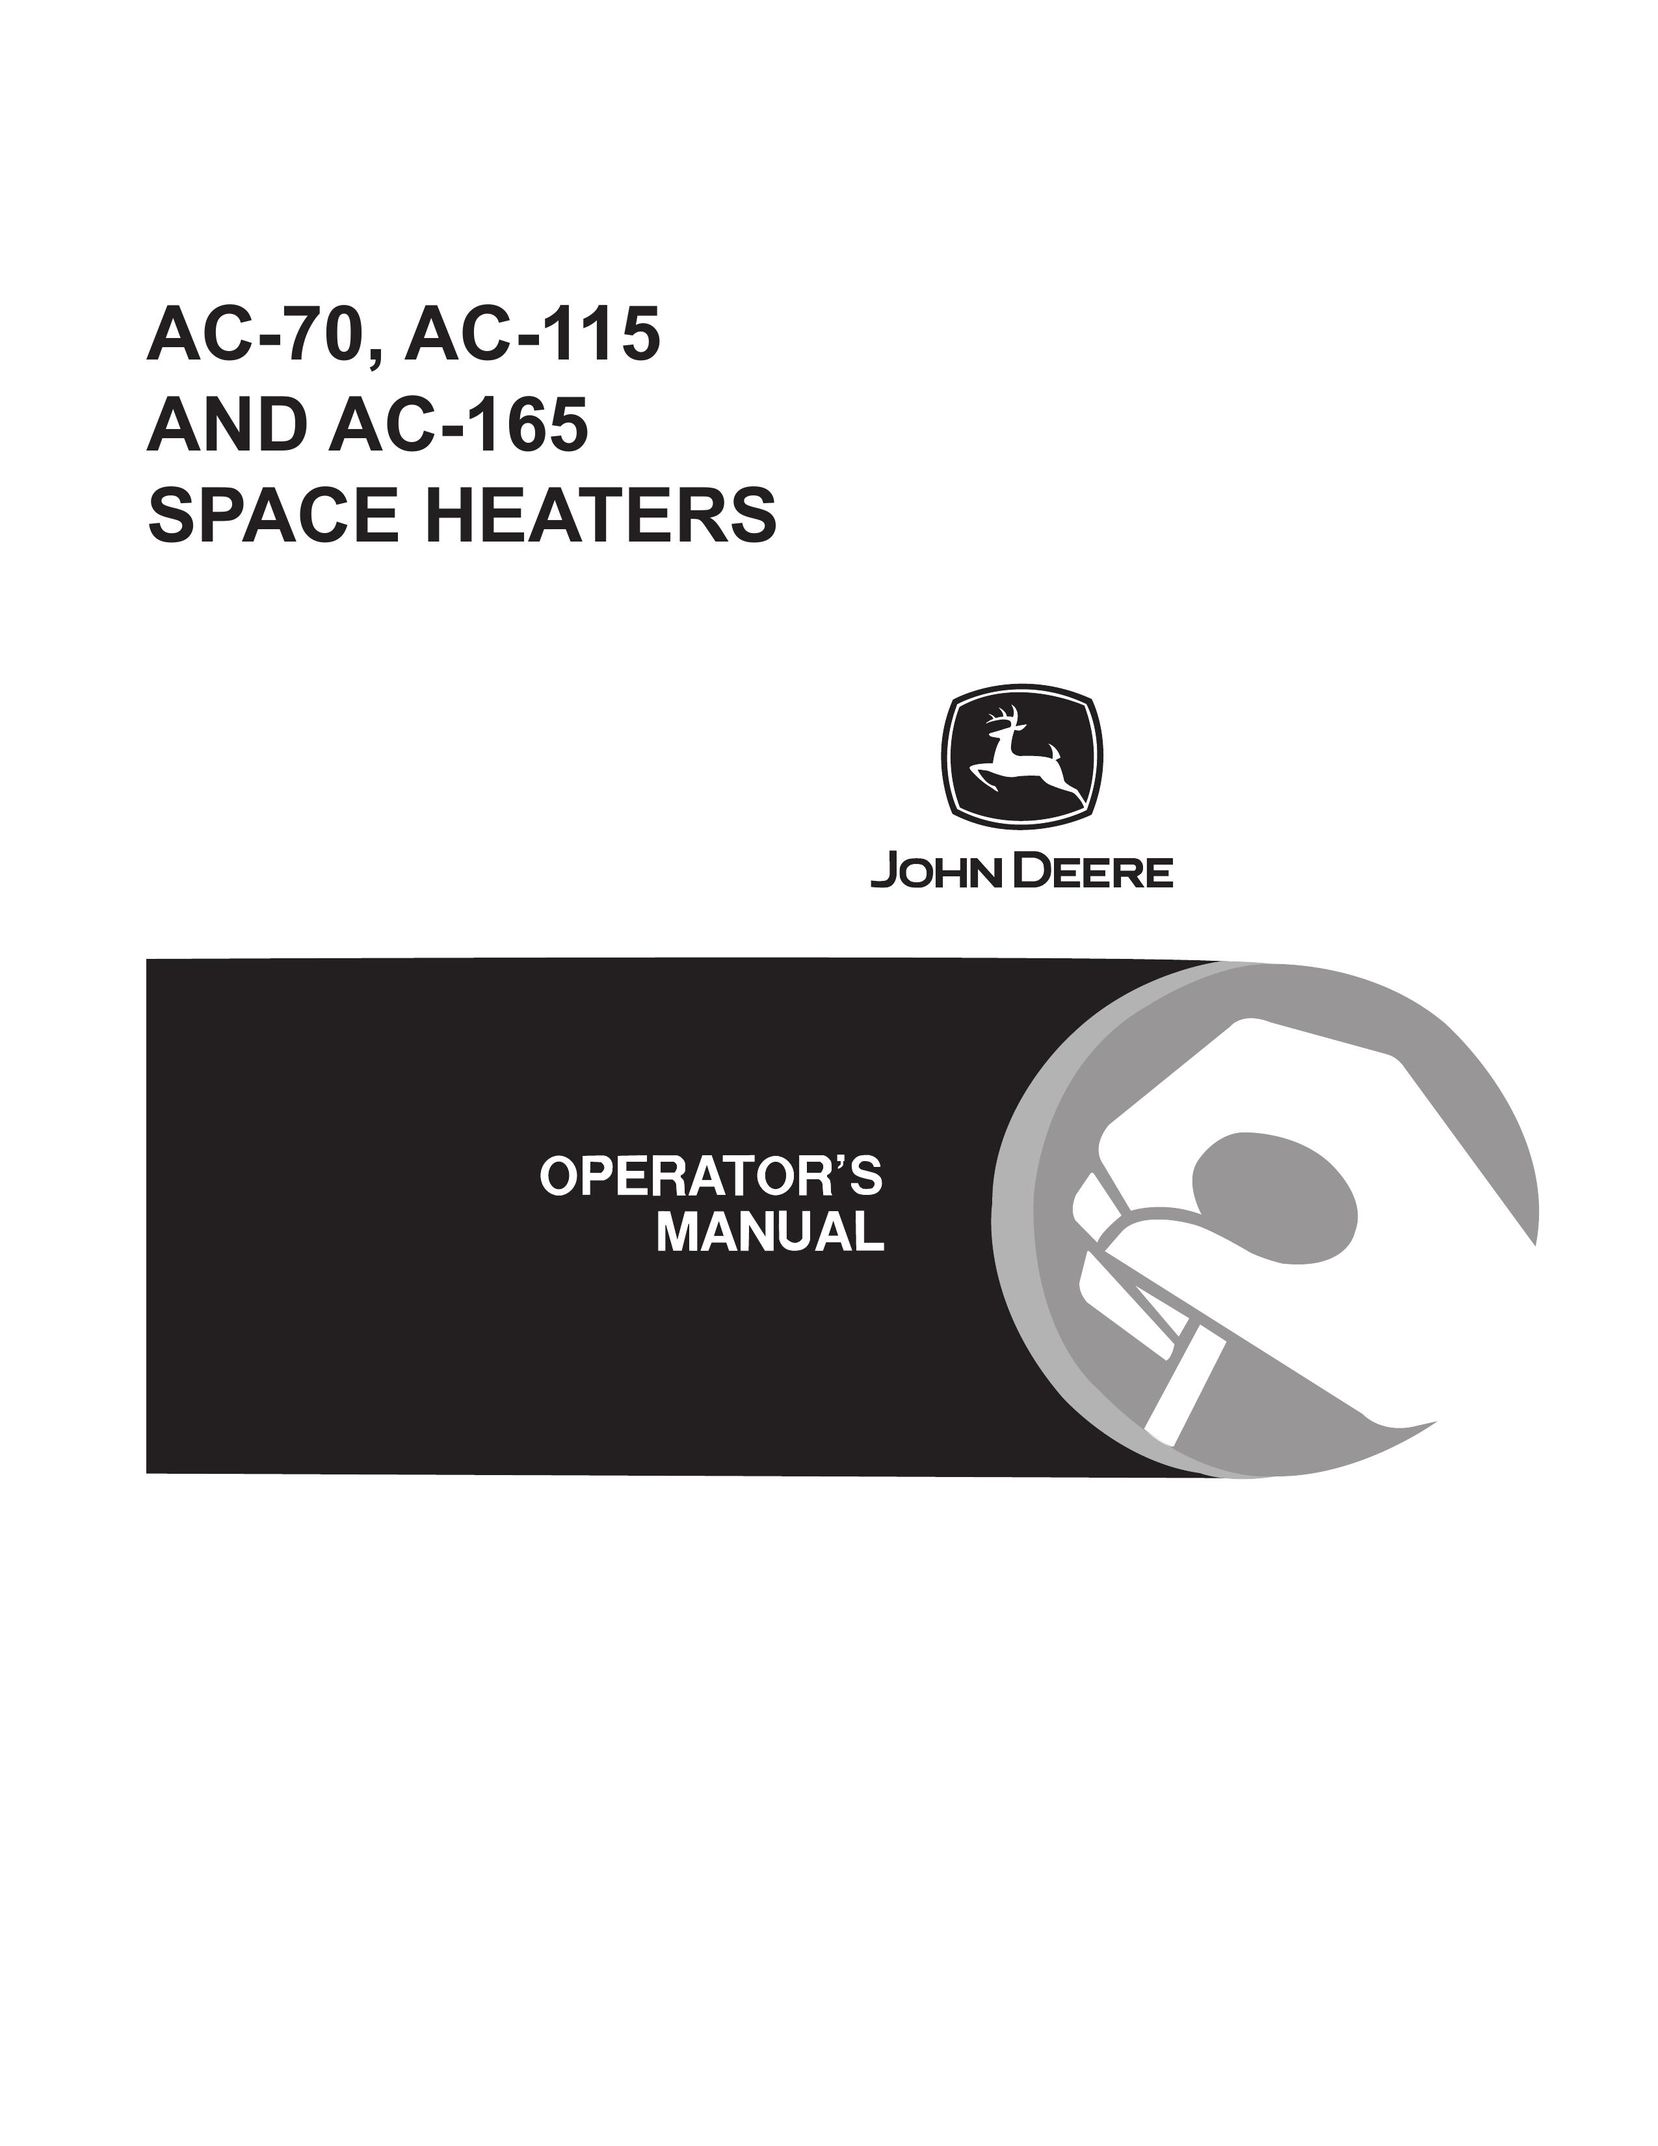 John Deere AC-165 Electric Heater User Manual